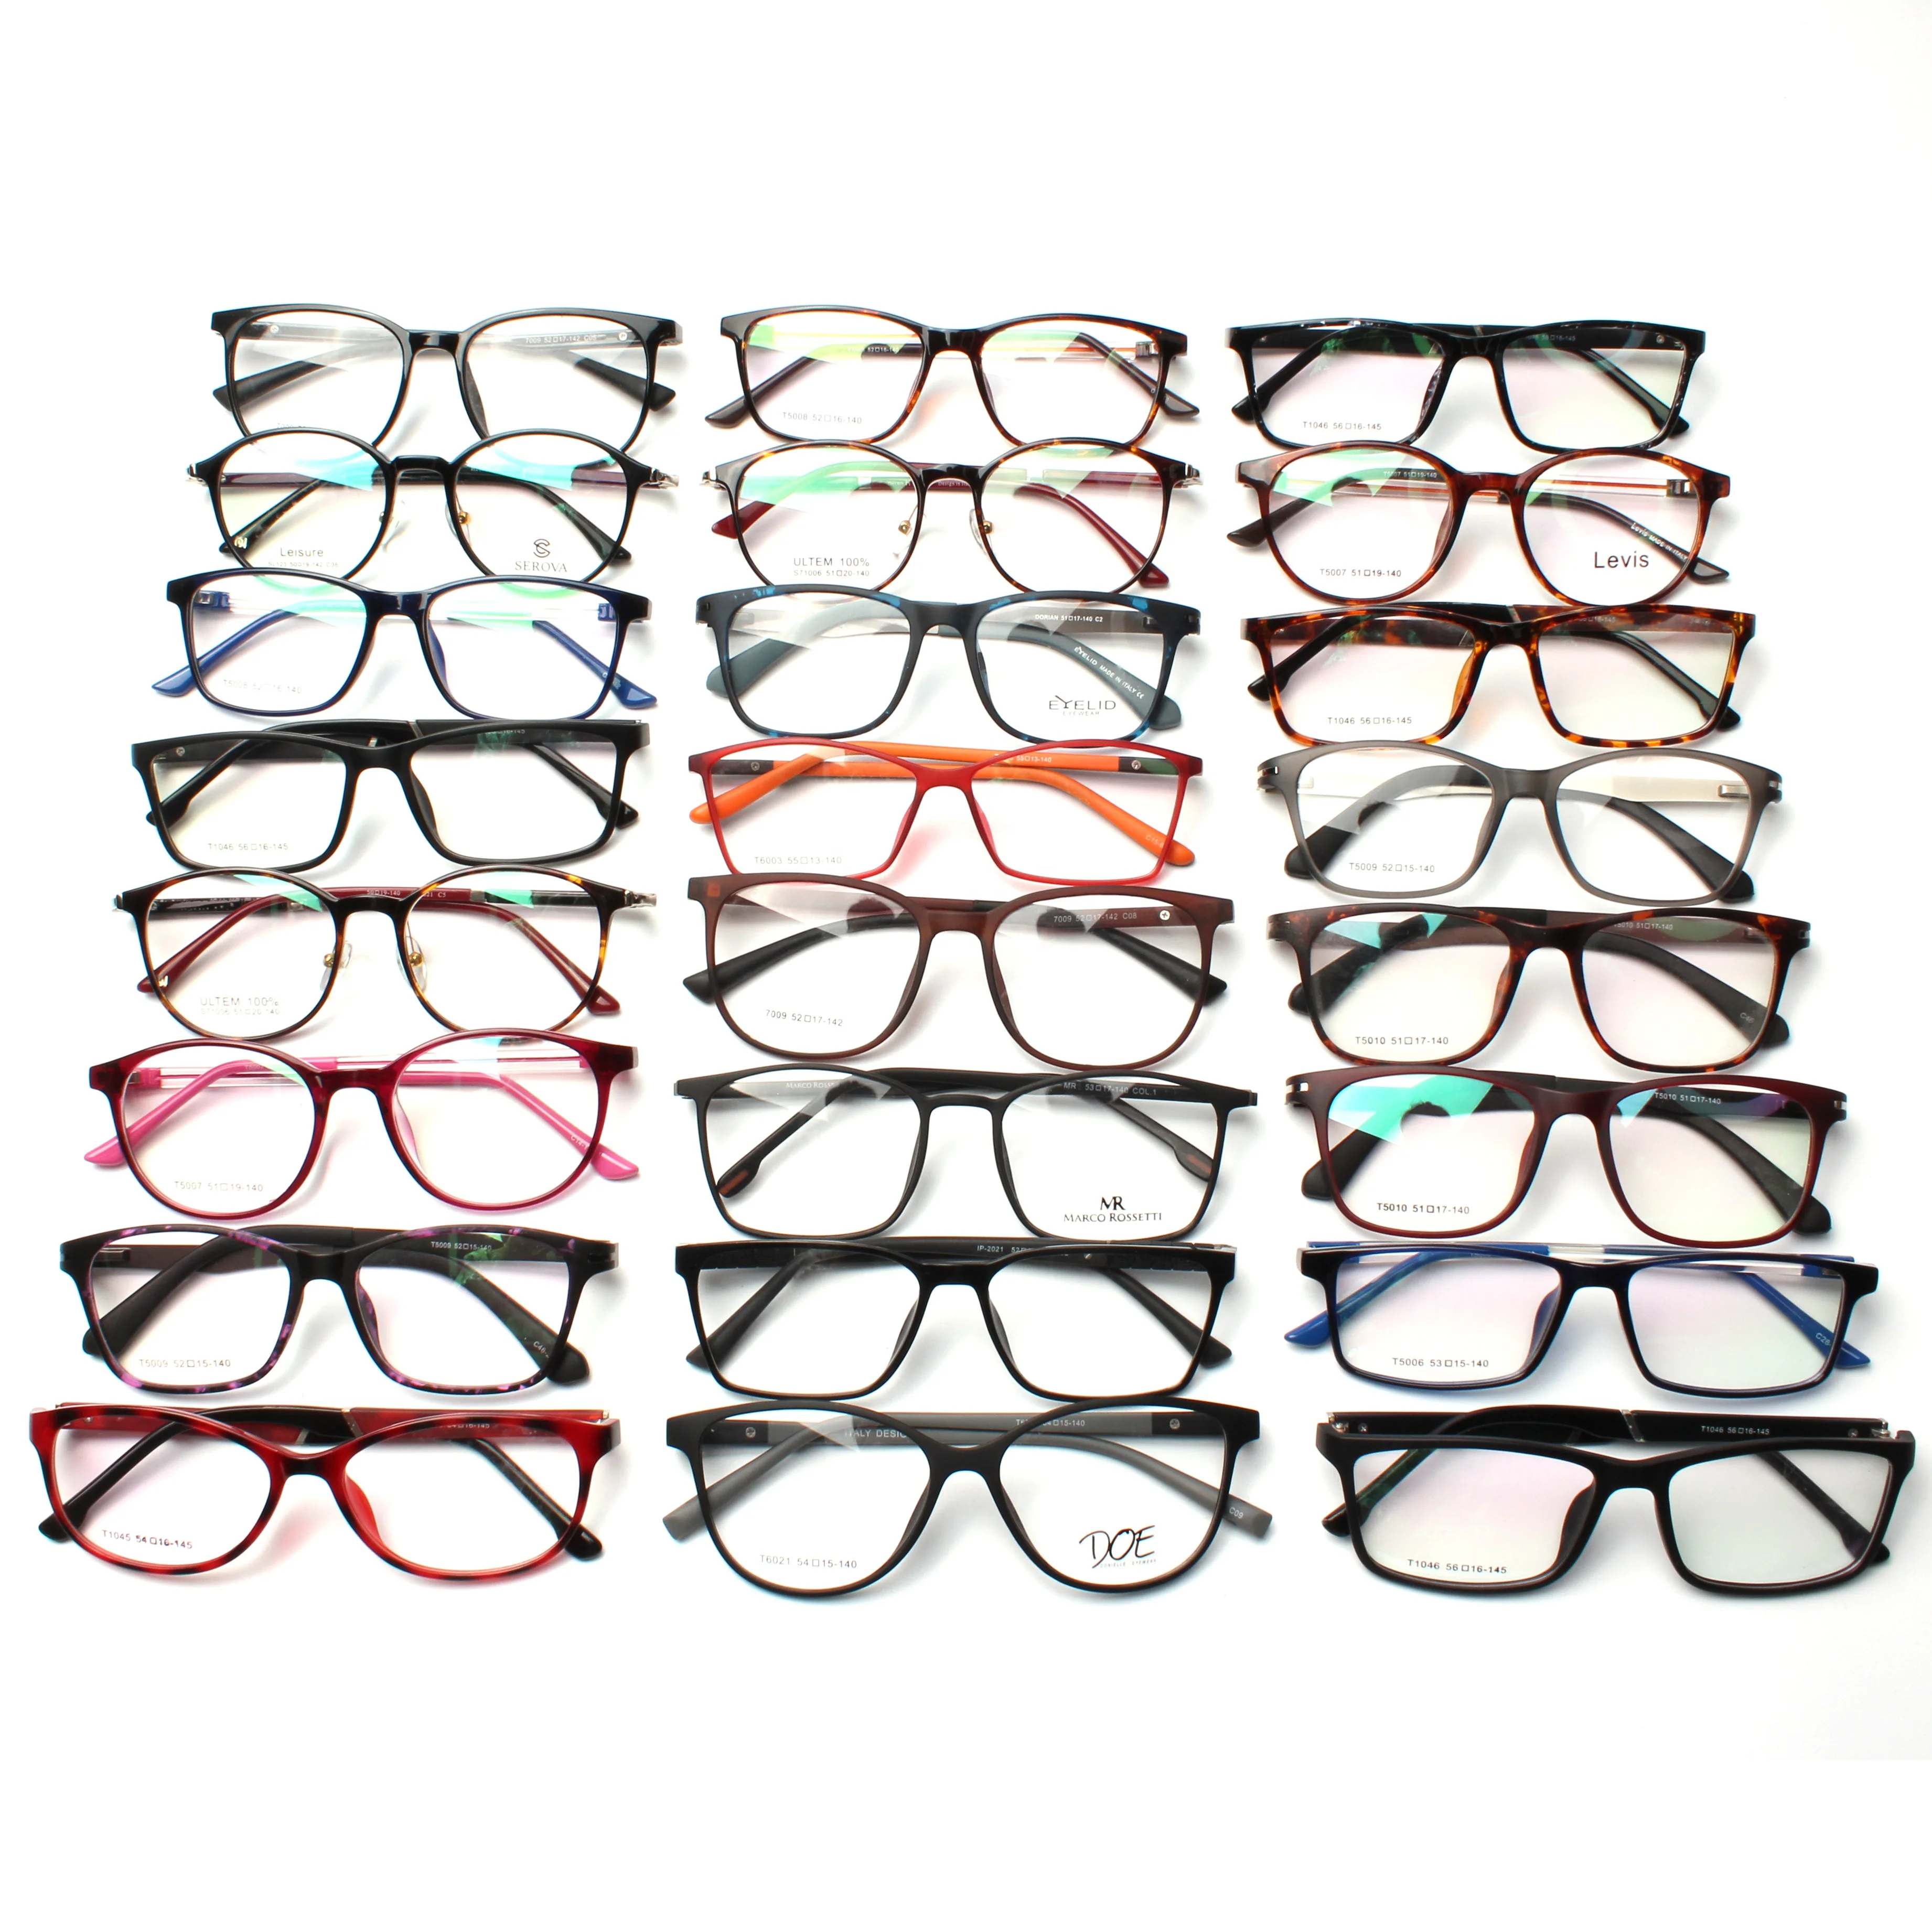 

Cheap stock assort eye glass frames ready made mixed colors high quality TR90 optical frames, Mixed colors cheap designer eyeglass frames